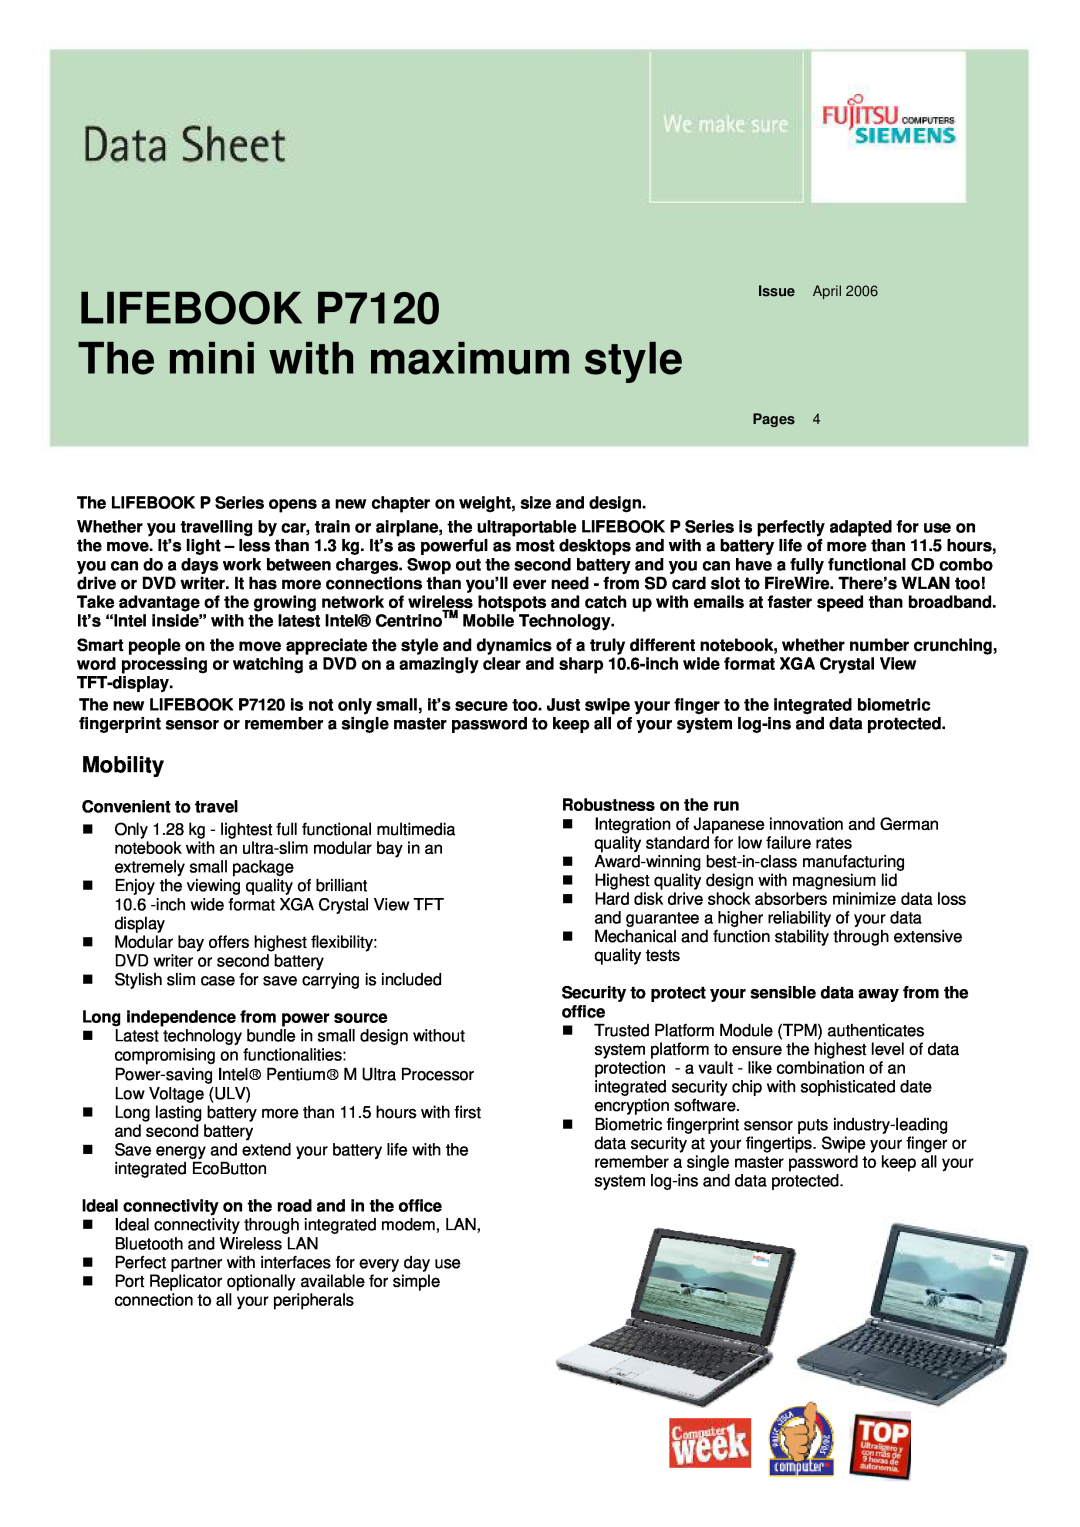 Fujitsu Siemens Computers manual LIFEBOOK P7120 The mini with maximum style, Mobility 